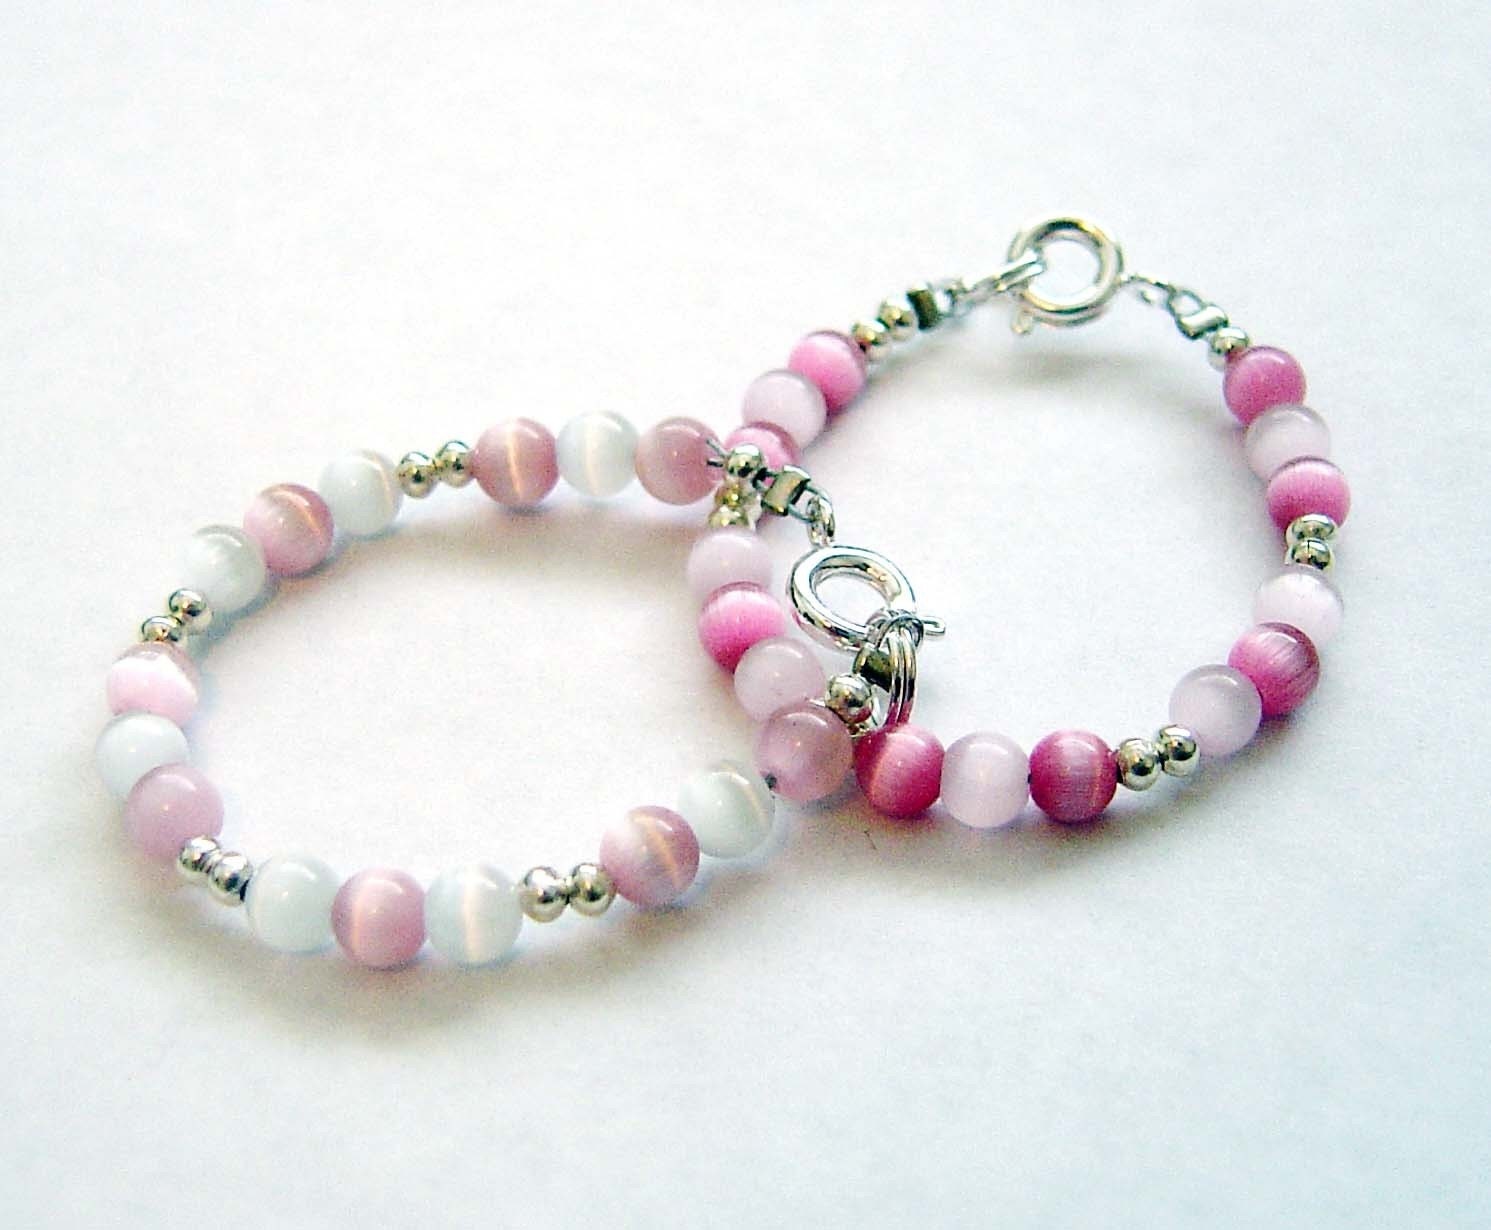 Baby Bracelets on Twins Baby Bracelets Set Of 2 All About Pink By Qt4baby On Etsy